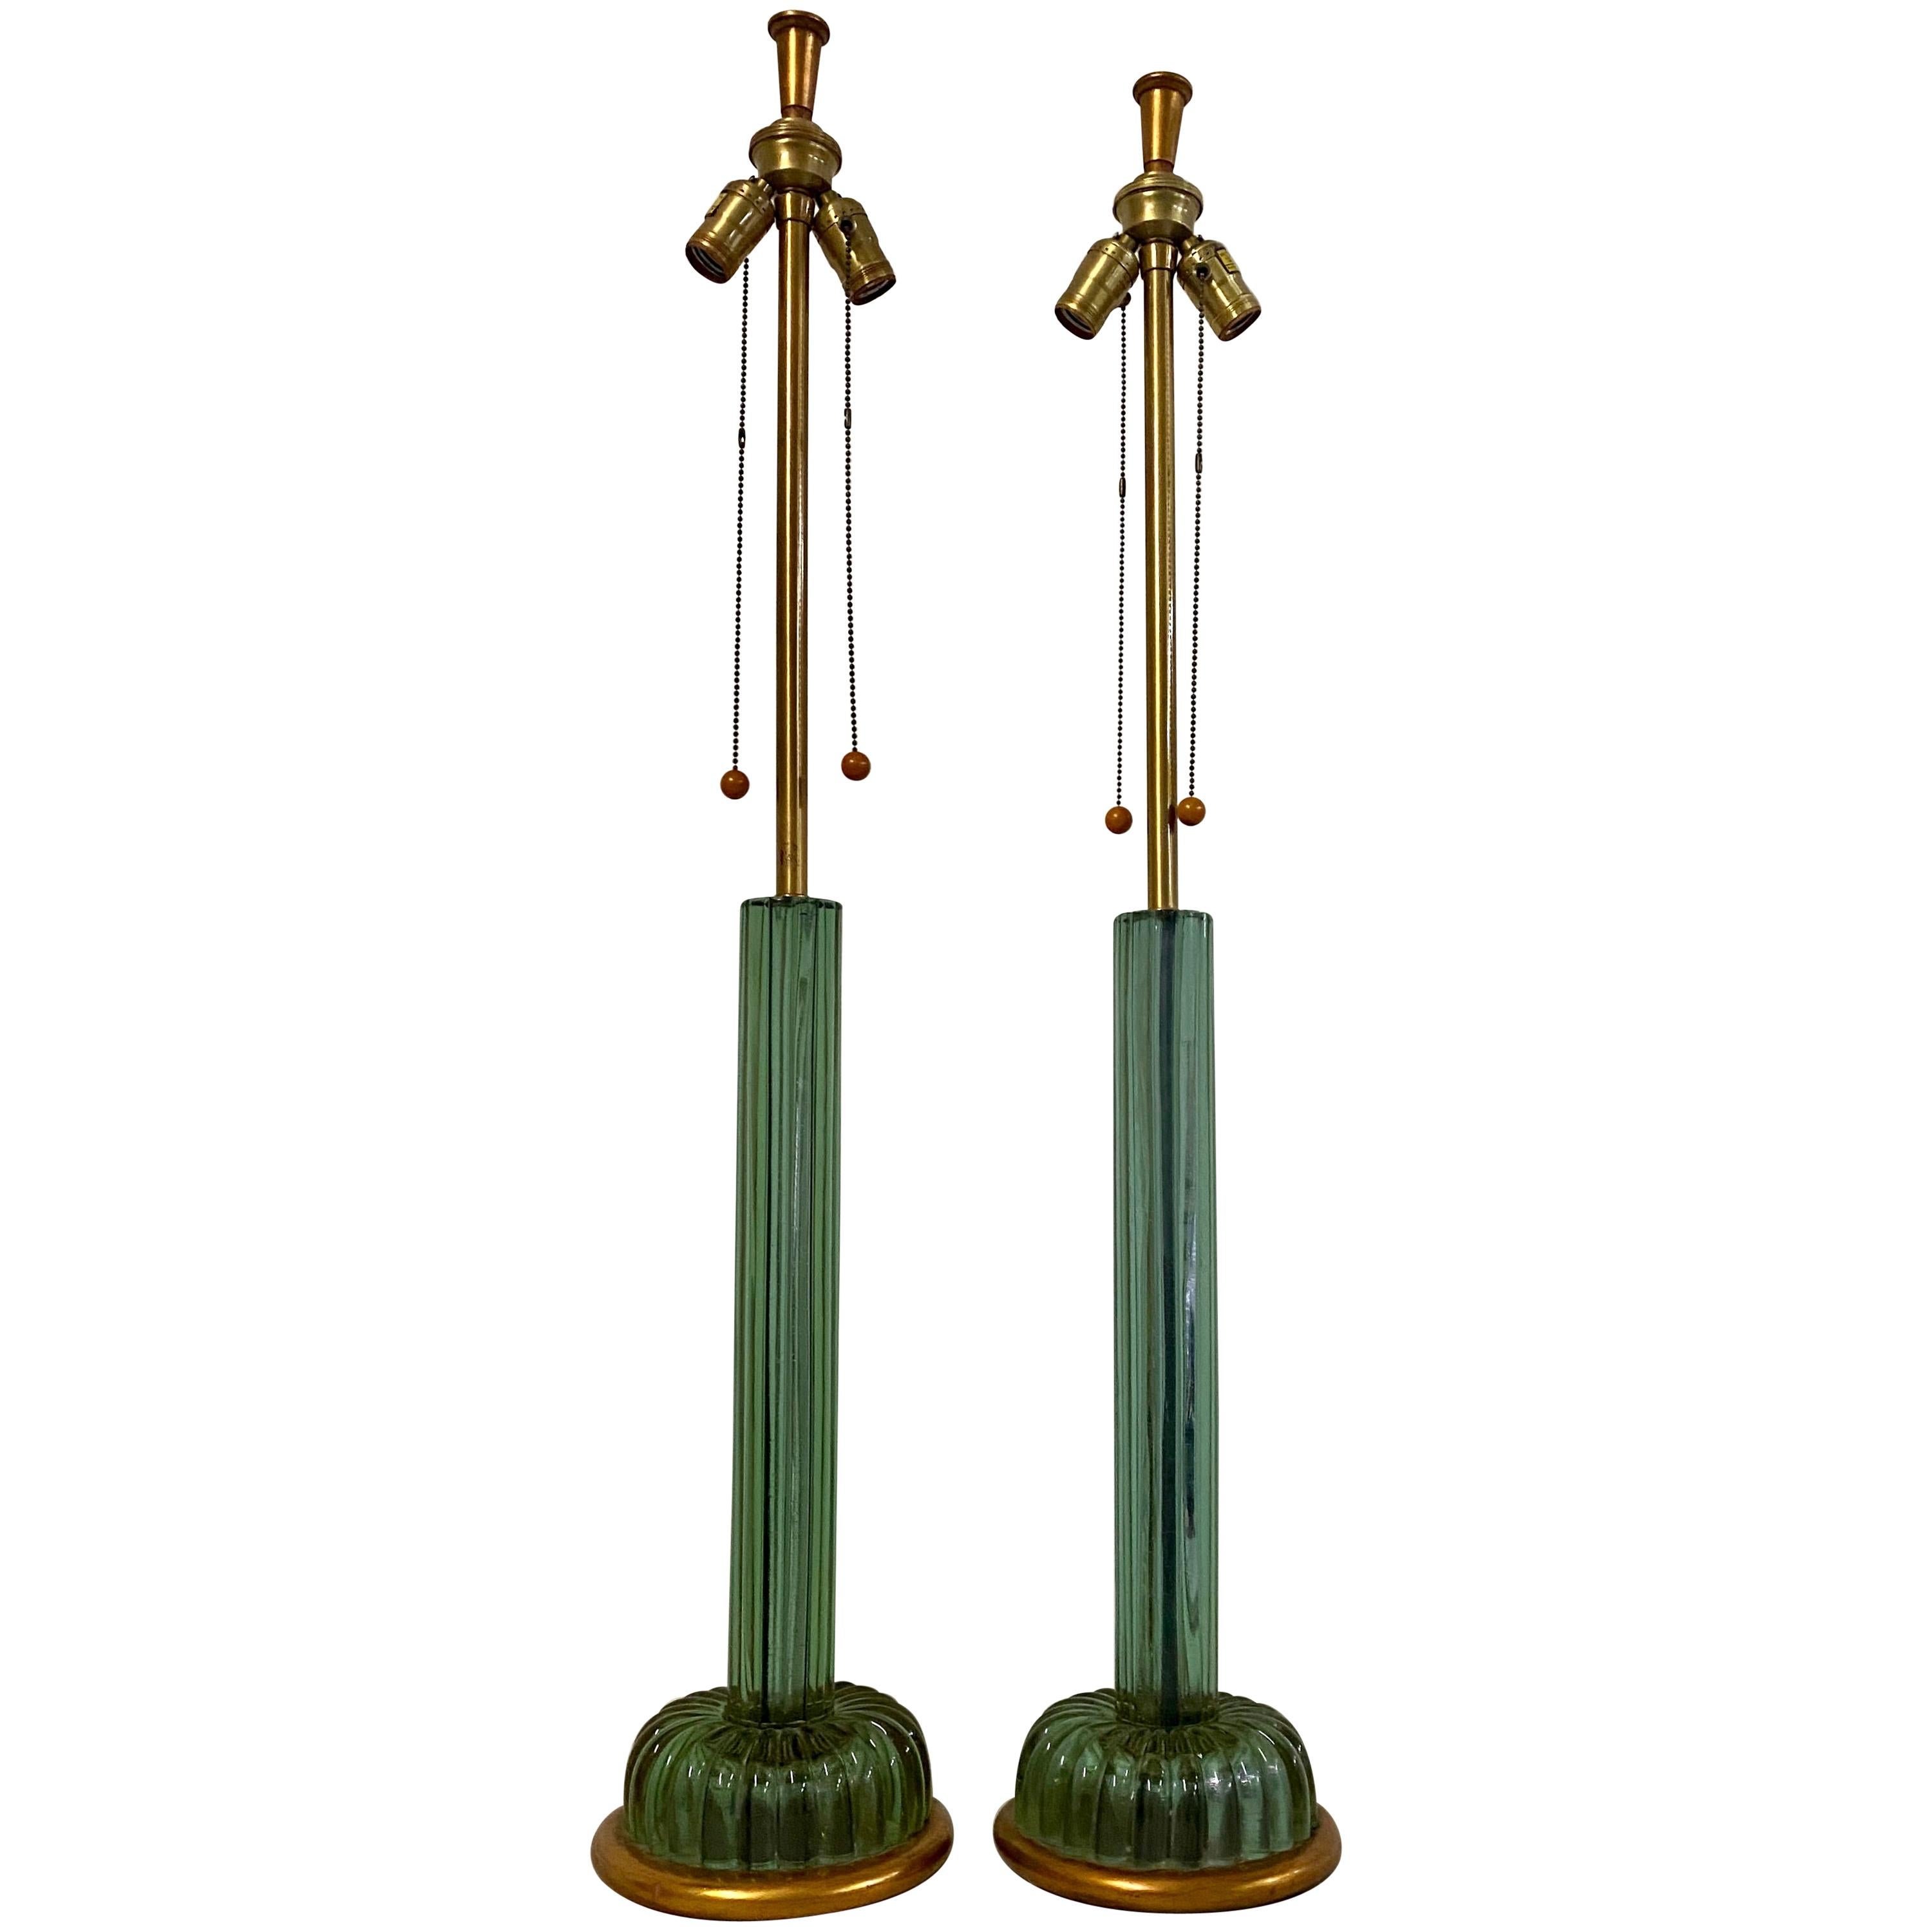 Pair of Emerald Green Murano Glass Lamps by Marbro Lamp Company, circa 1950